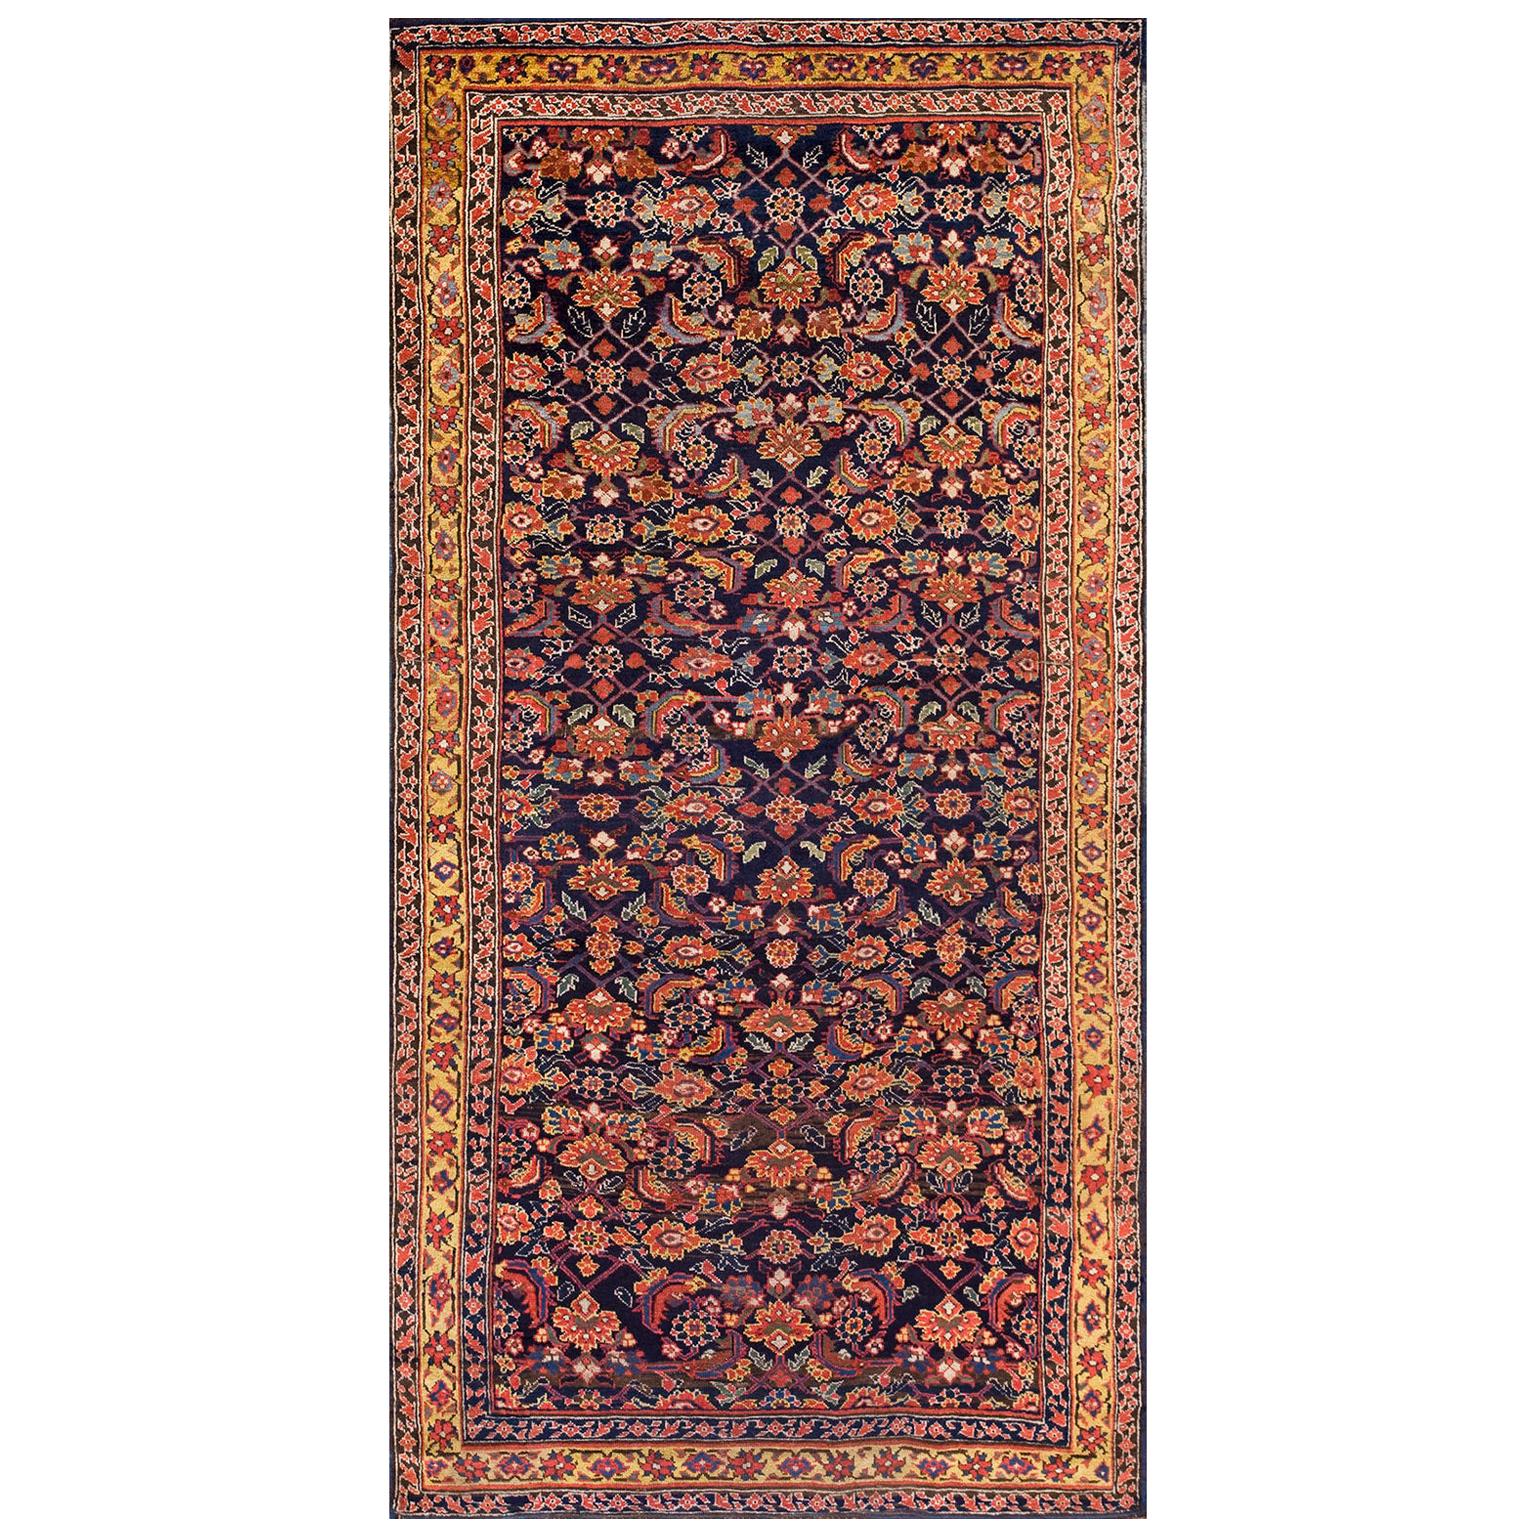 Mid-19th Century N.W Persian Carpet ( 4'10" x 9'4" - 147 x 284 )